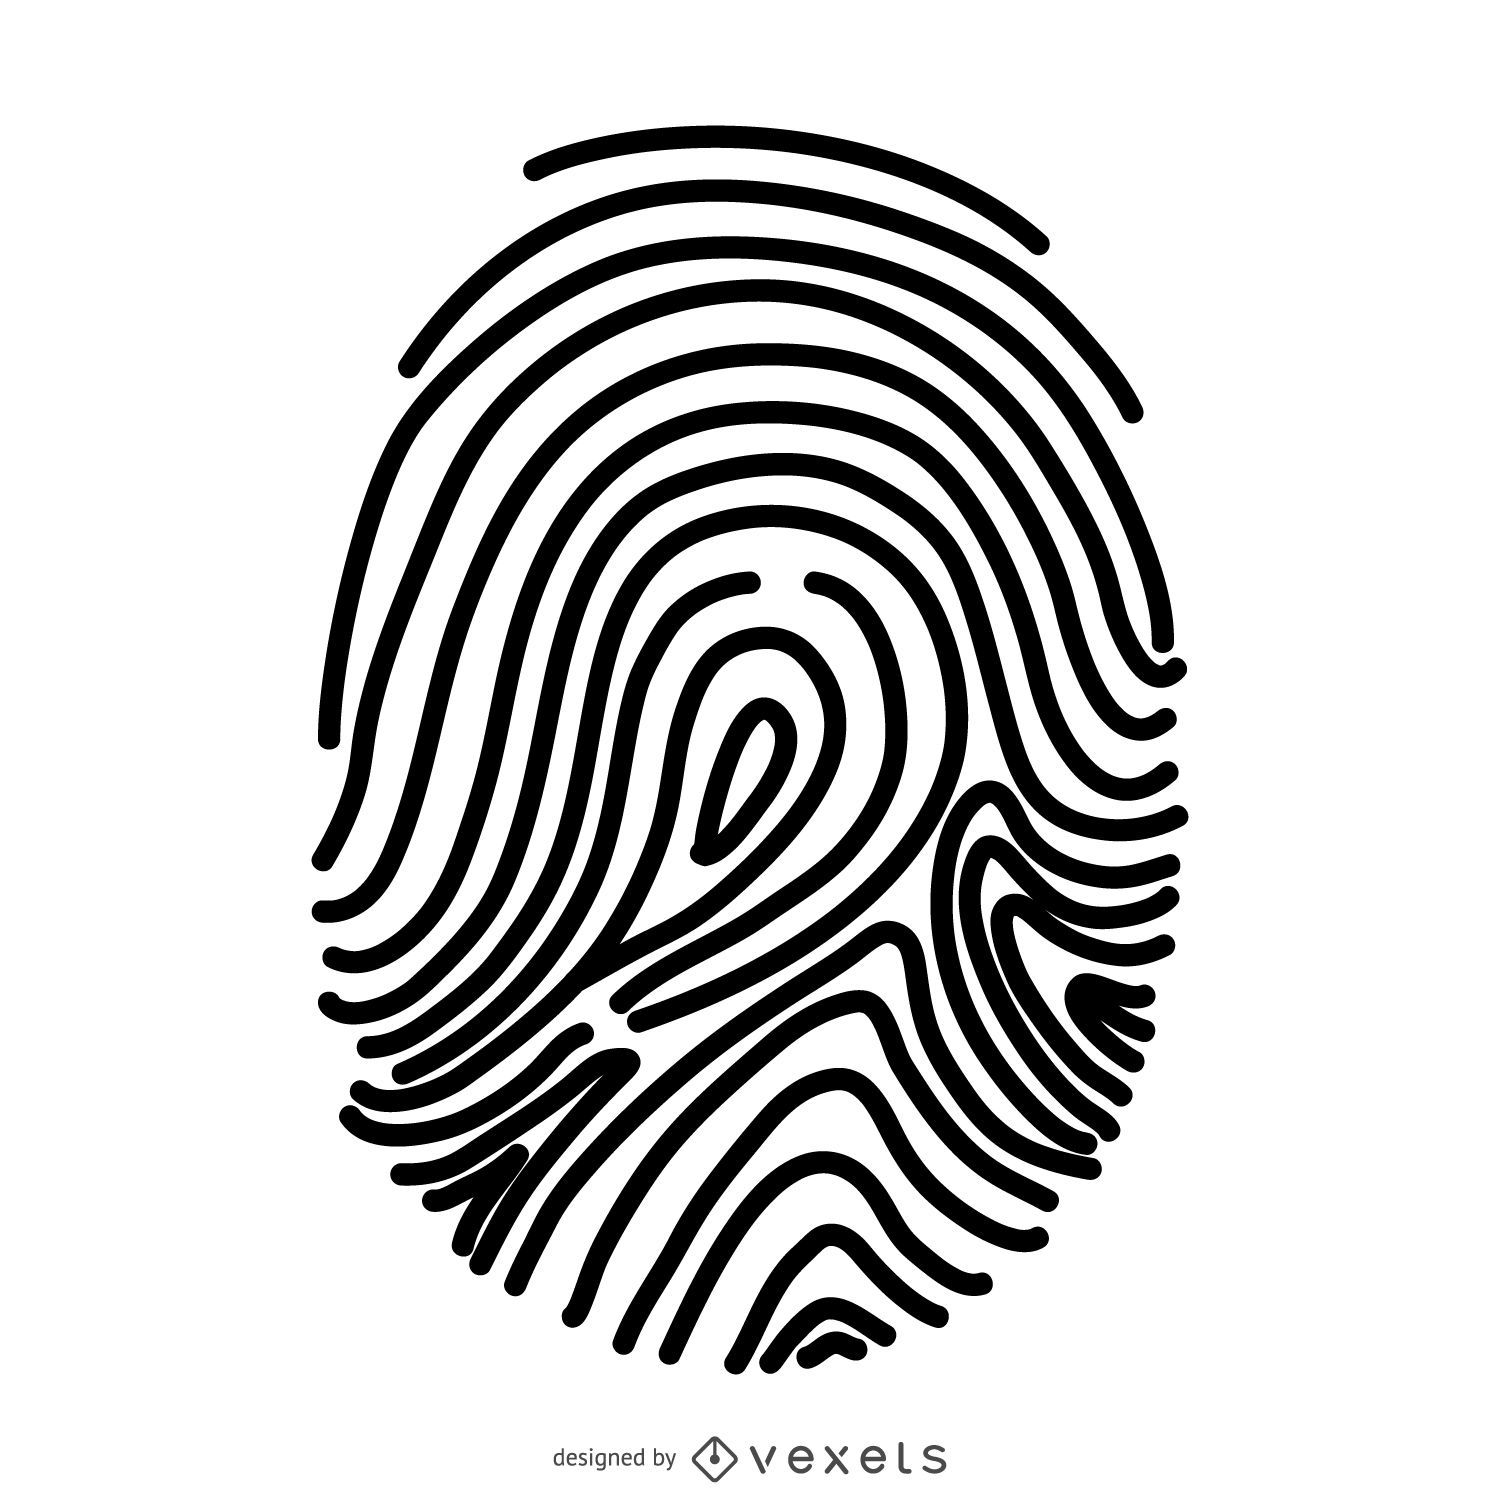 Basic Fingerprint Illustration Vector Download